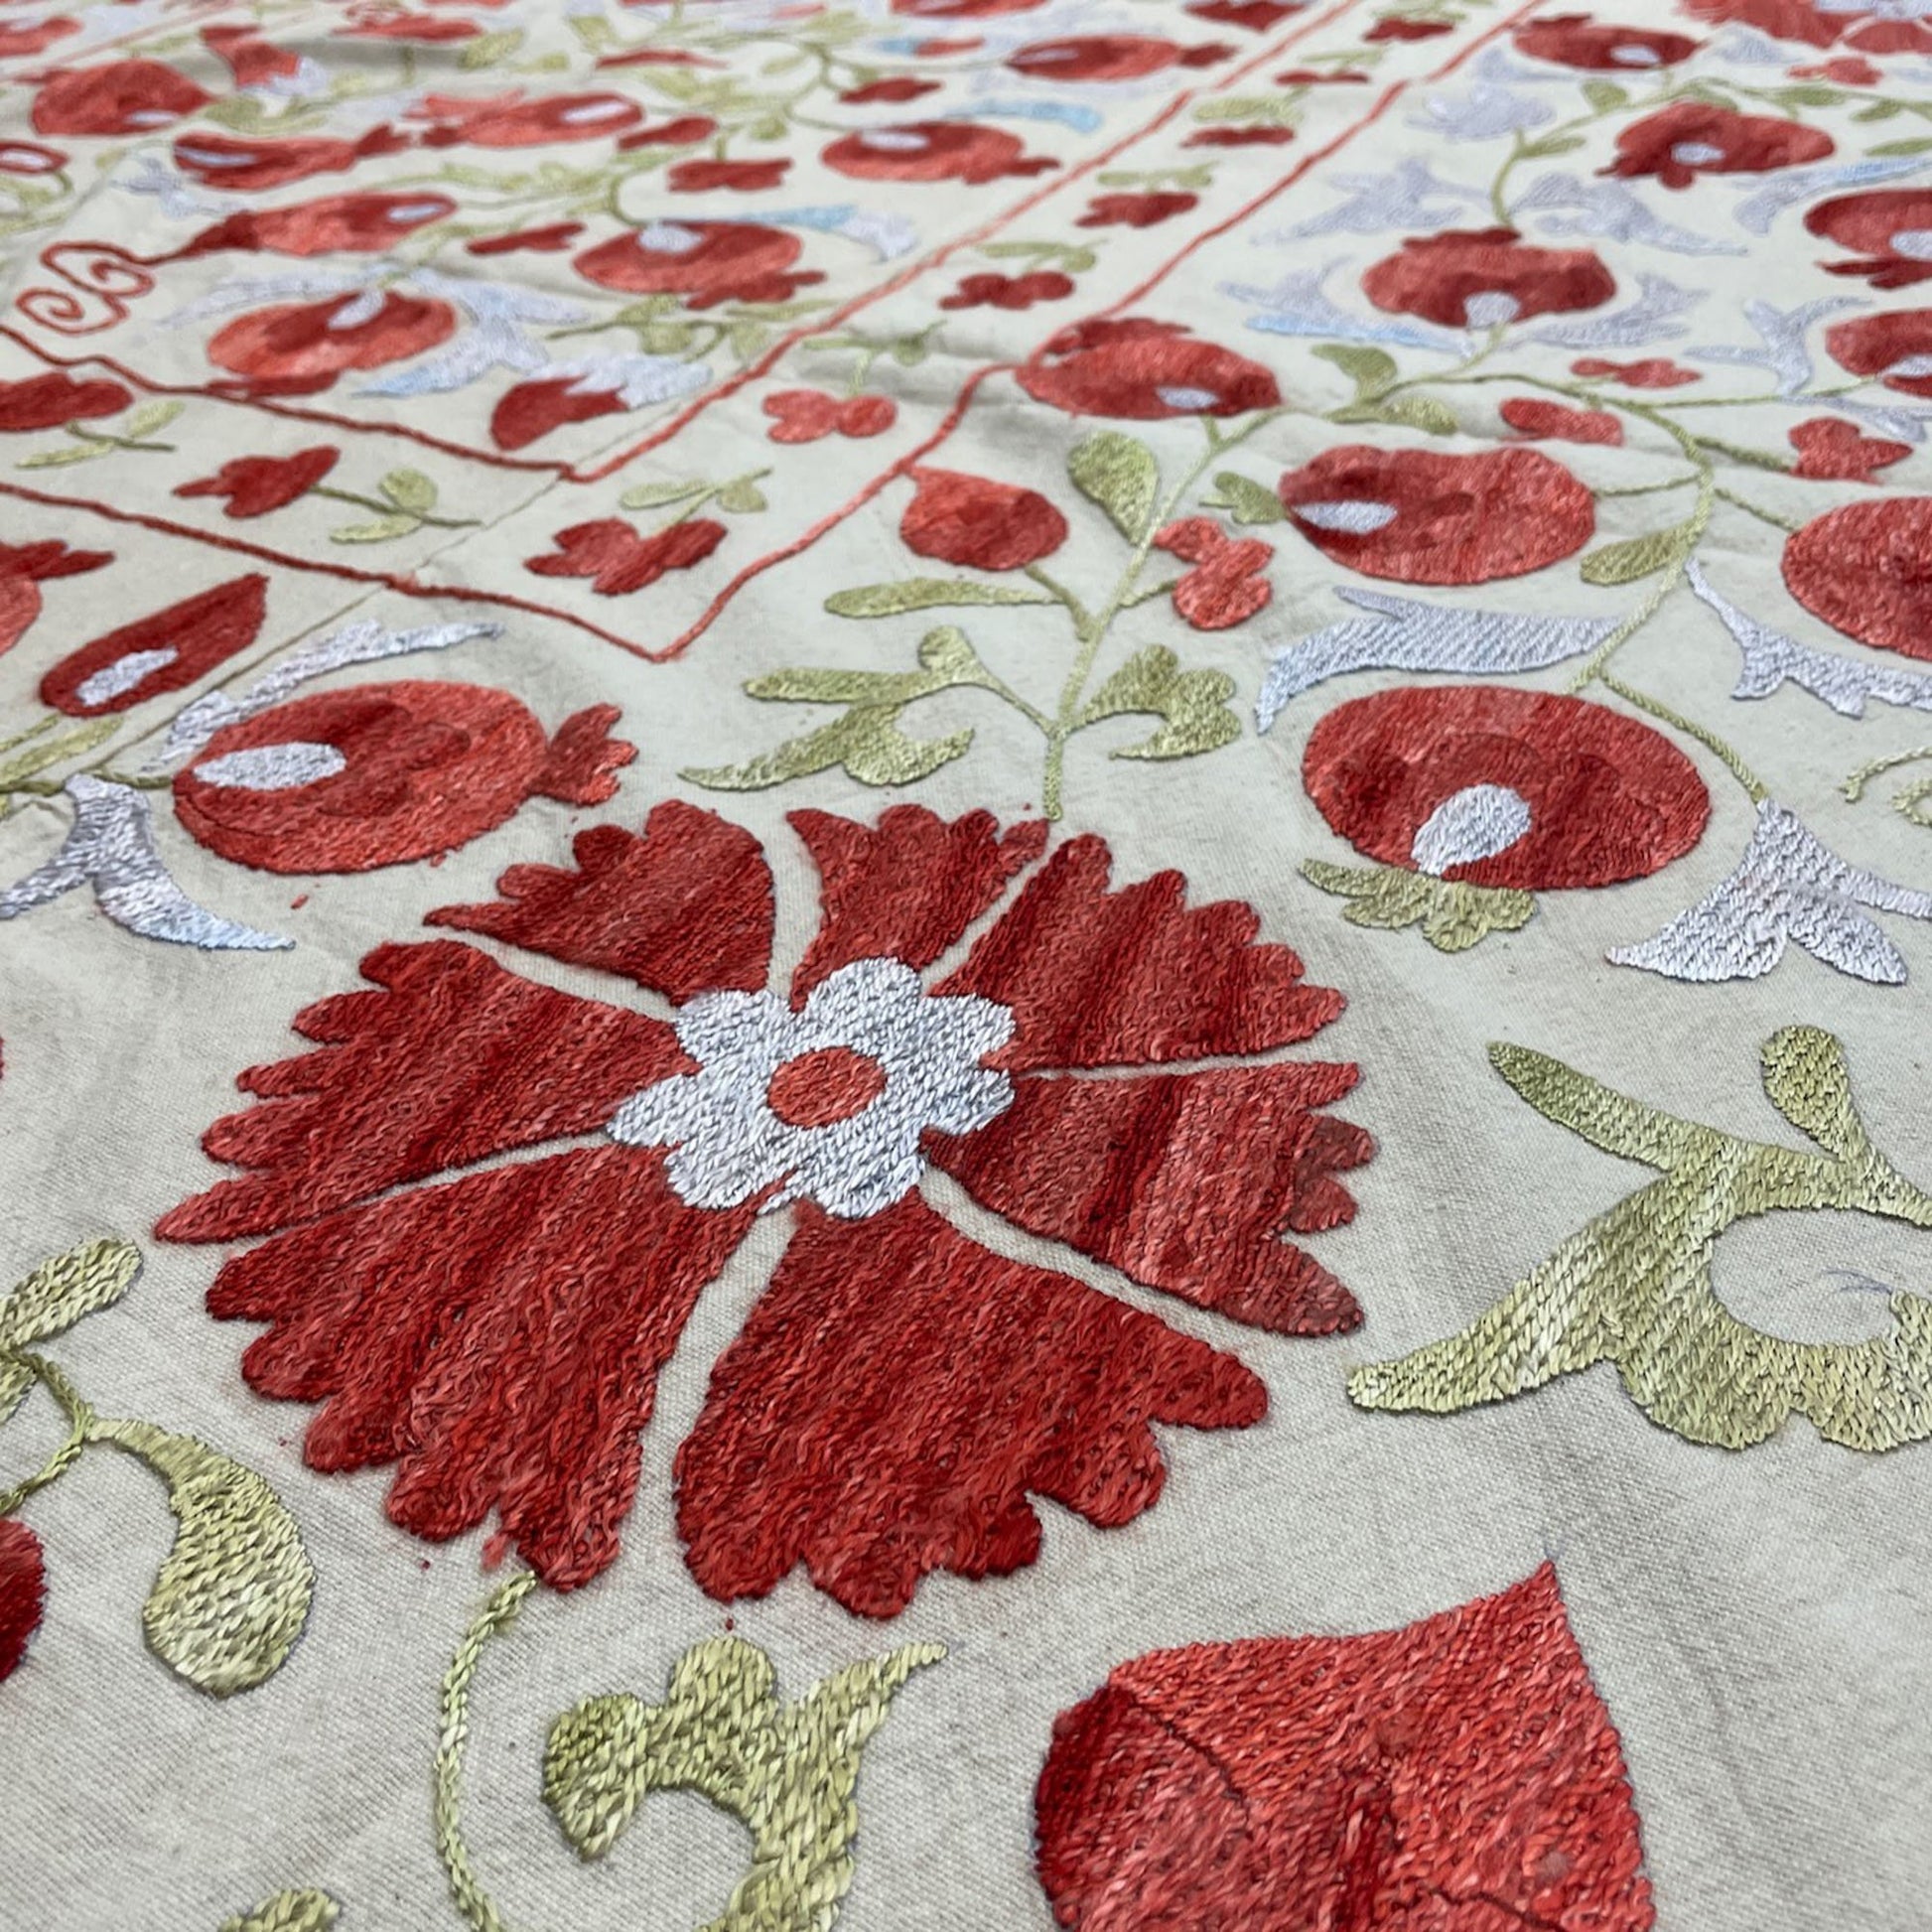 Uzbeki Suzani Hand Embroidered Textile Wall Hanging | Home Décor | Throw | 140cm x 205cm SUZ1205005 - Wildash London